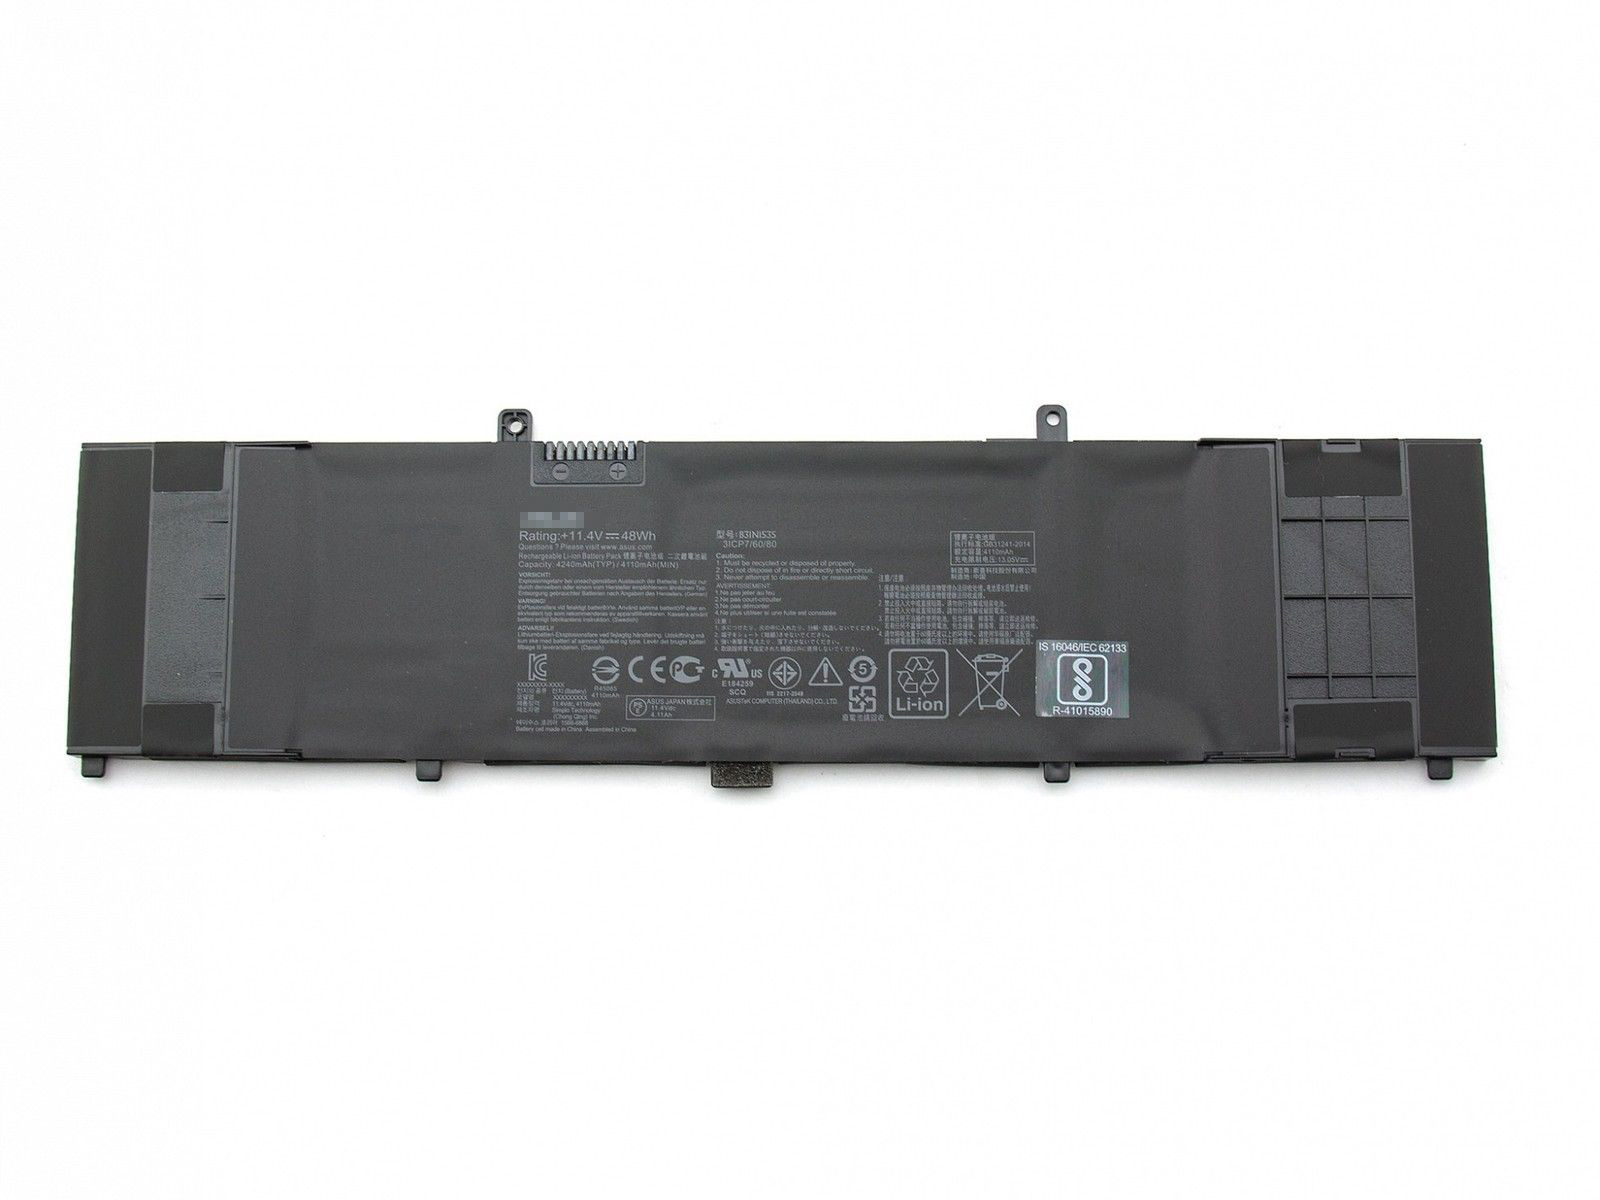 Asus zenbook аккумулятор